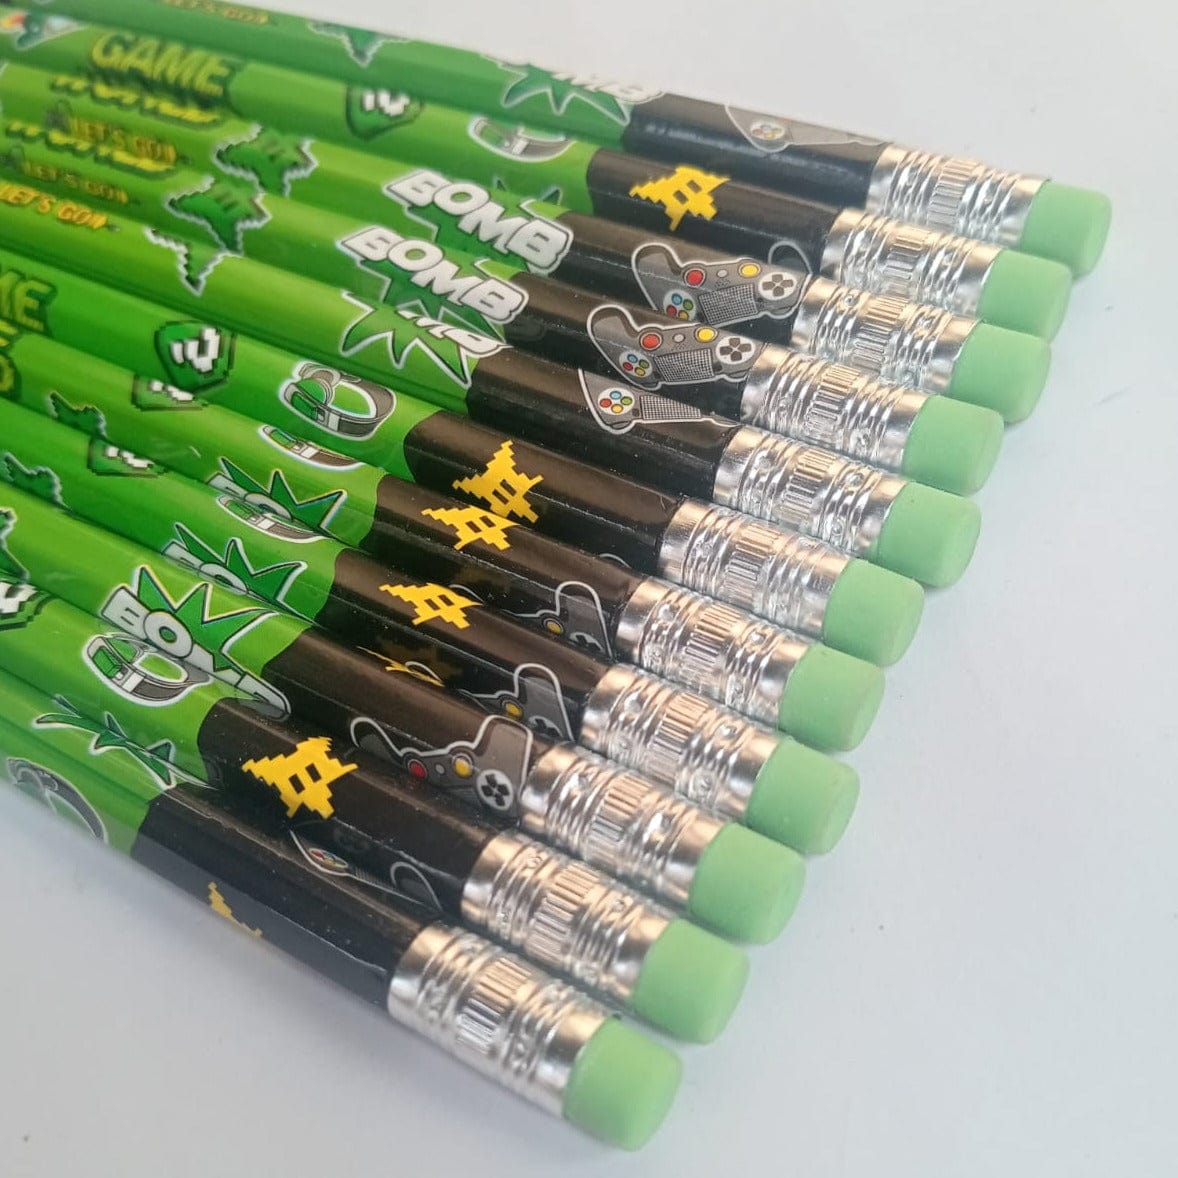 Sun international pencils GAME WORLD - Premium printed Pencil Set of 12 -Piece Pack of Subtle Elegance